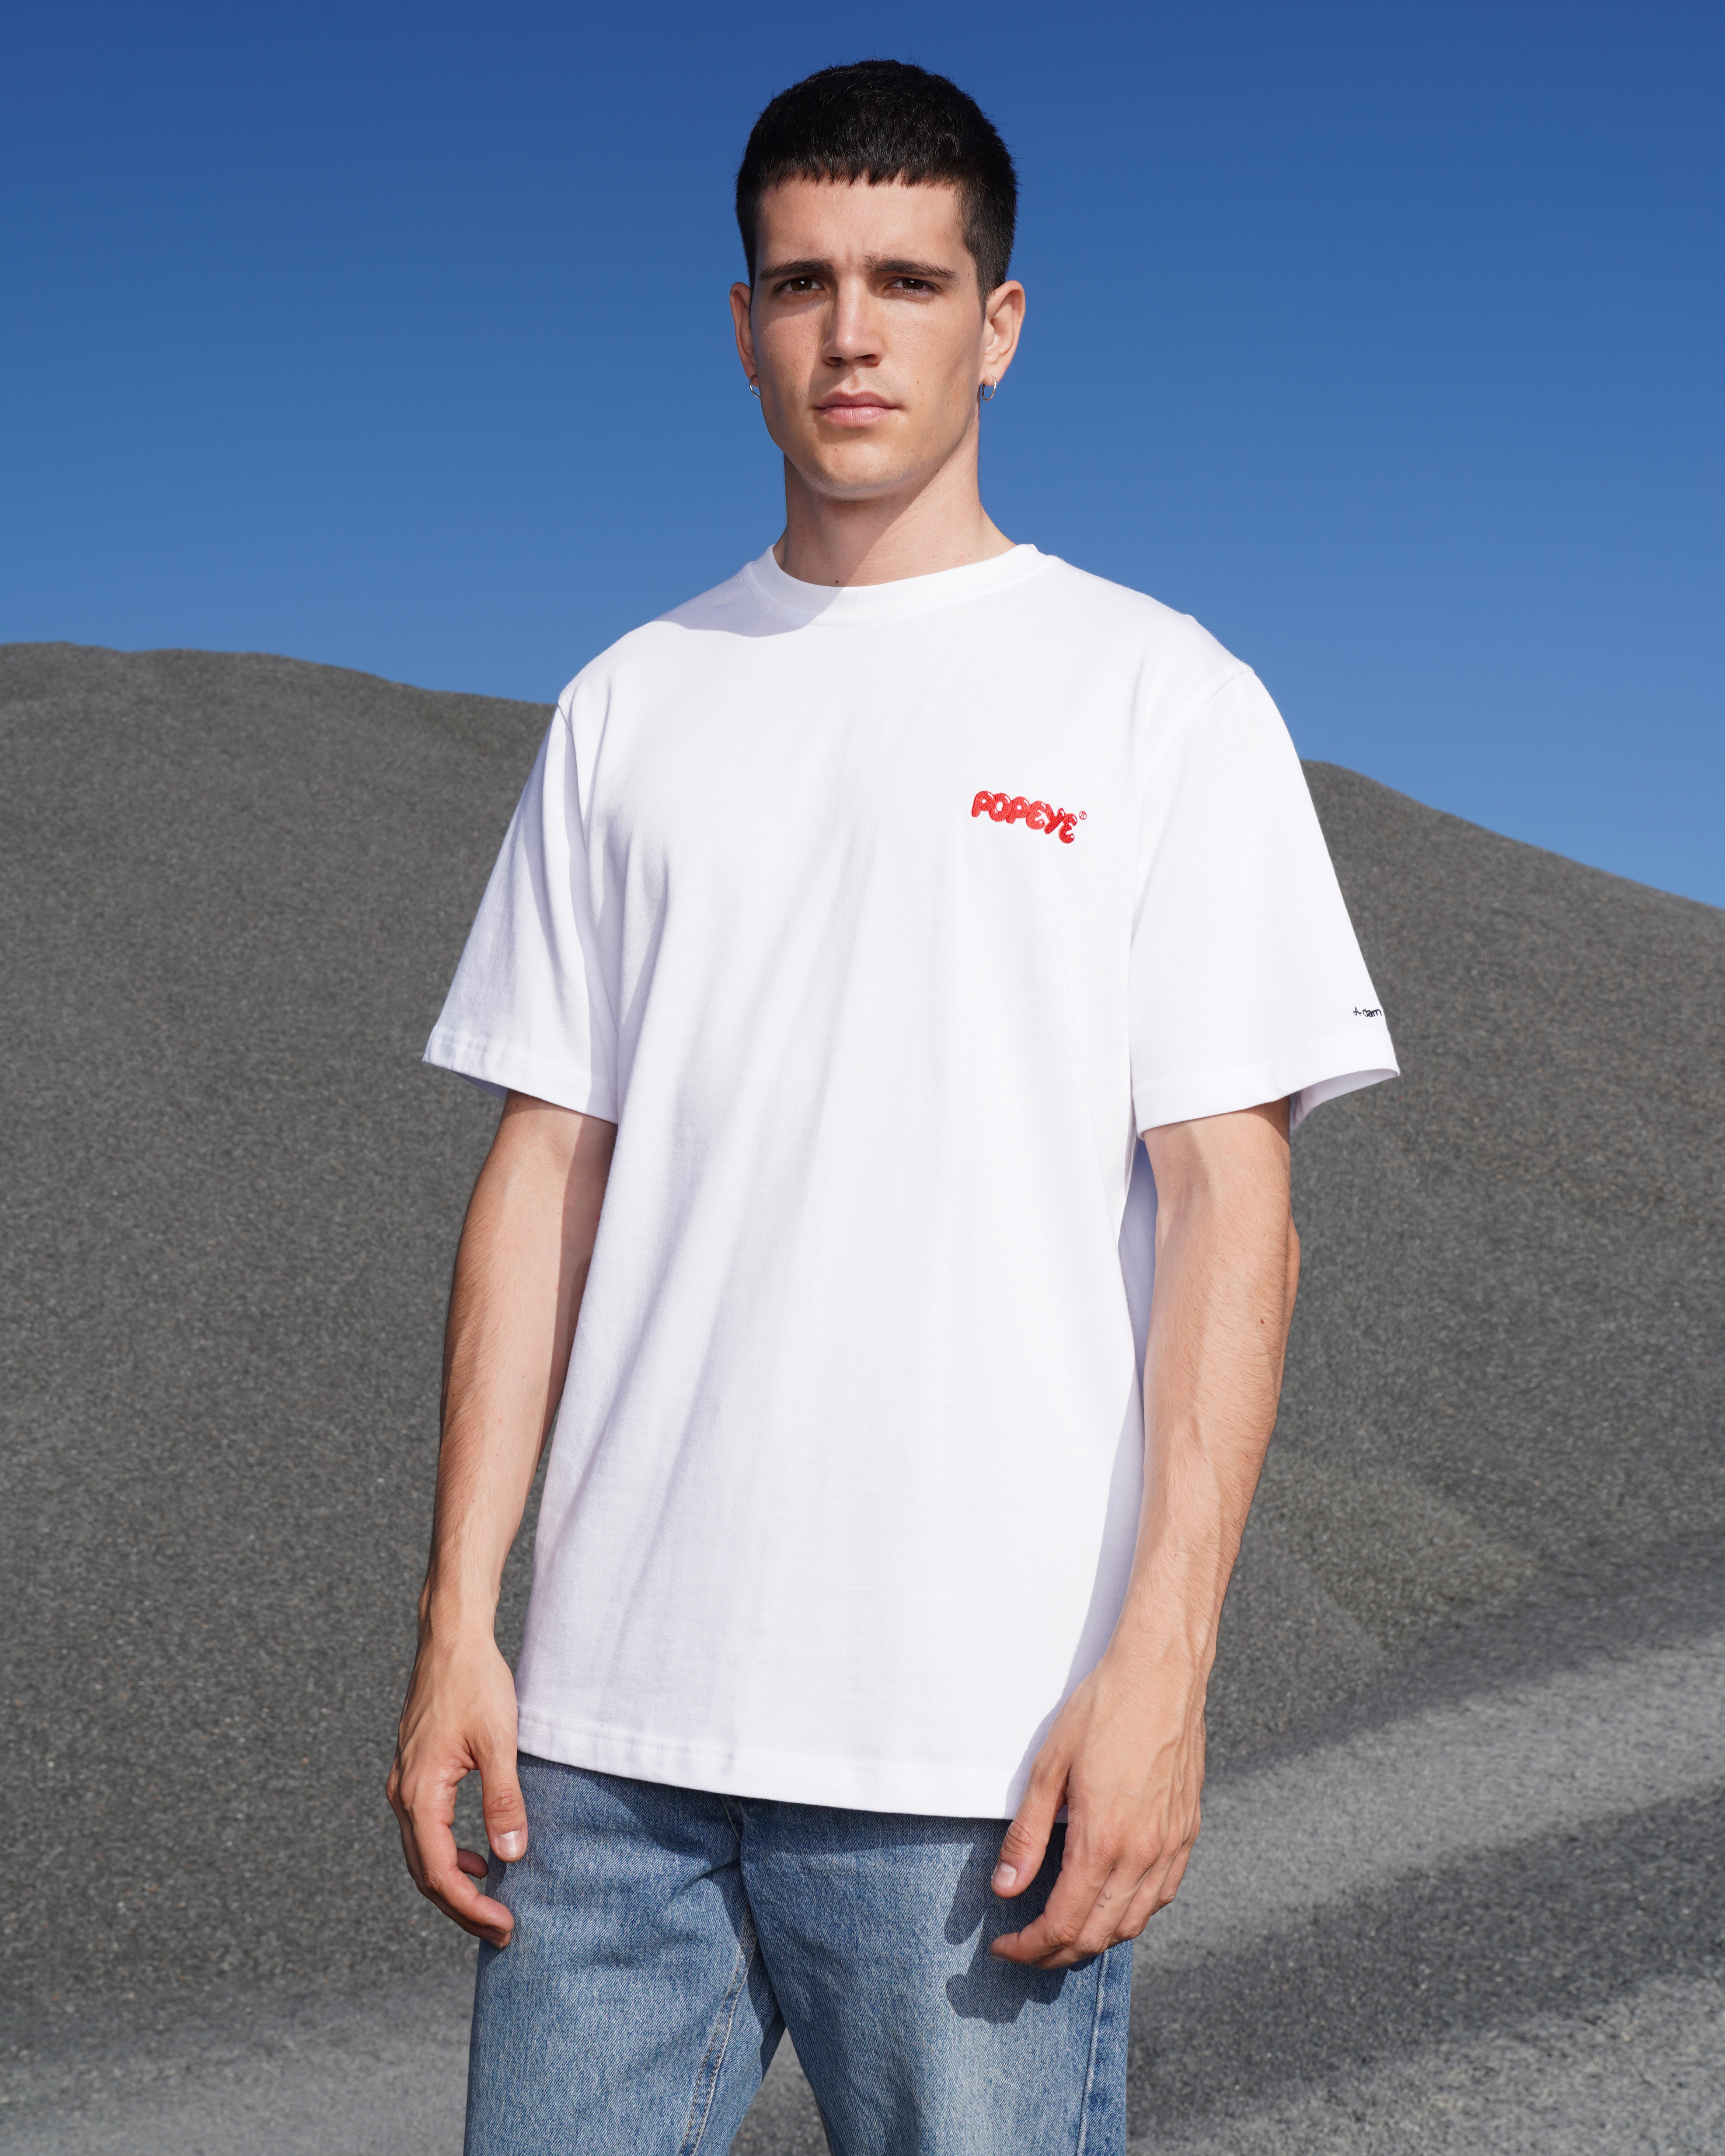 x with premium | A-dam T-shirt Popeye White Popeye A-dam organic print